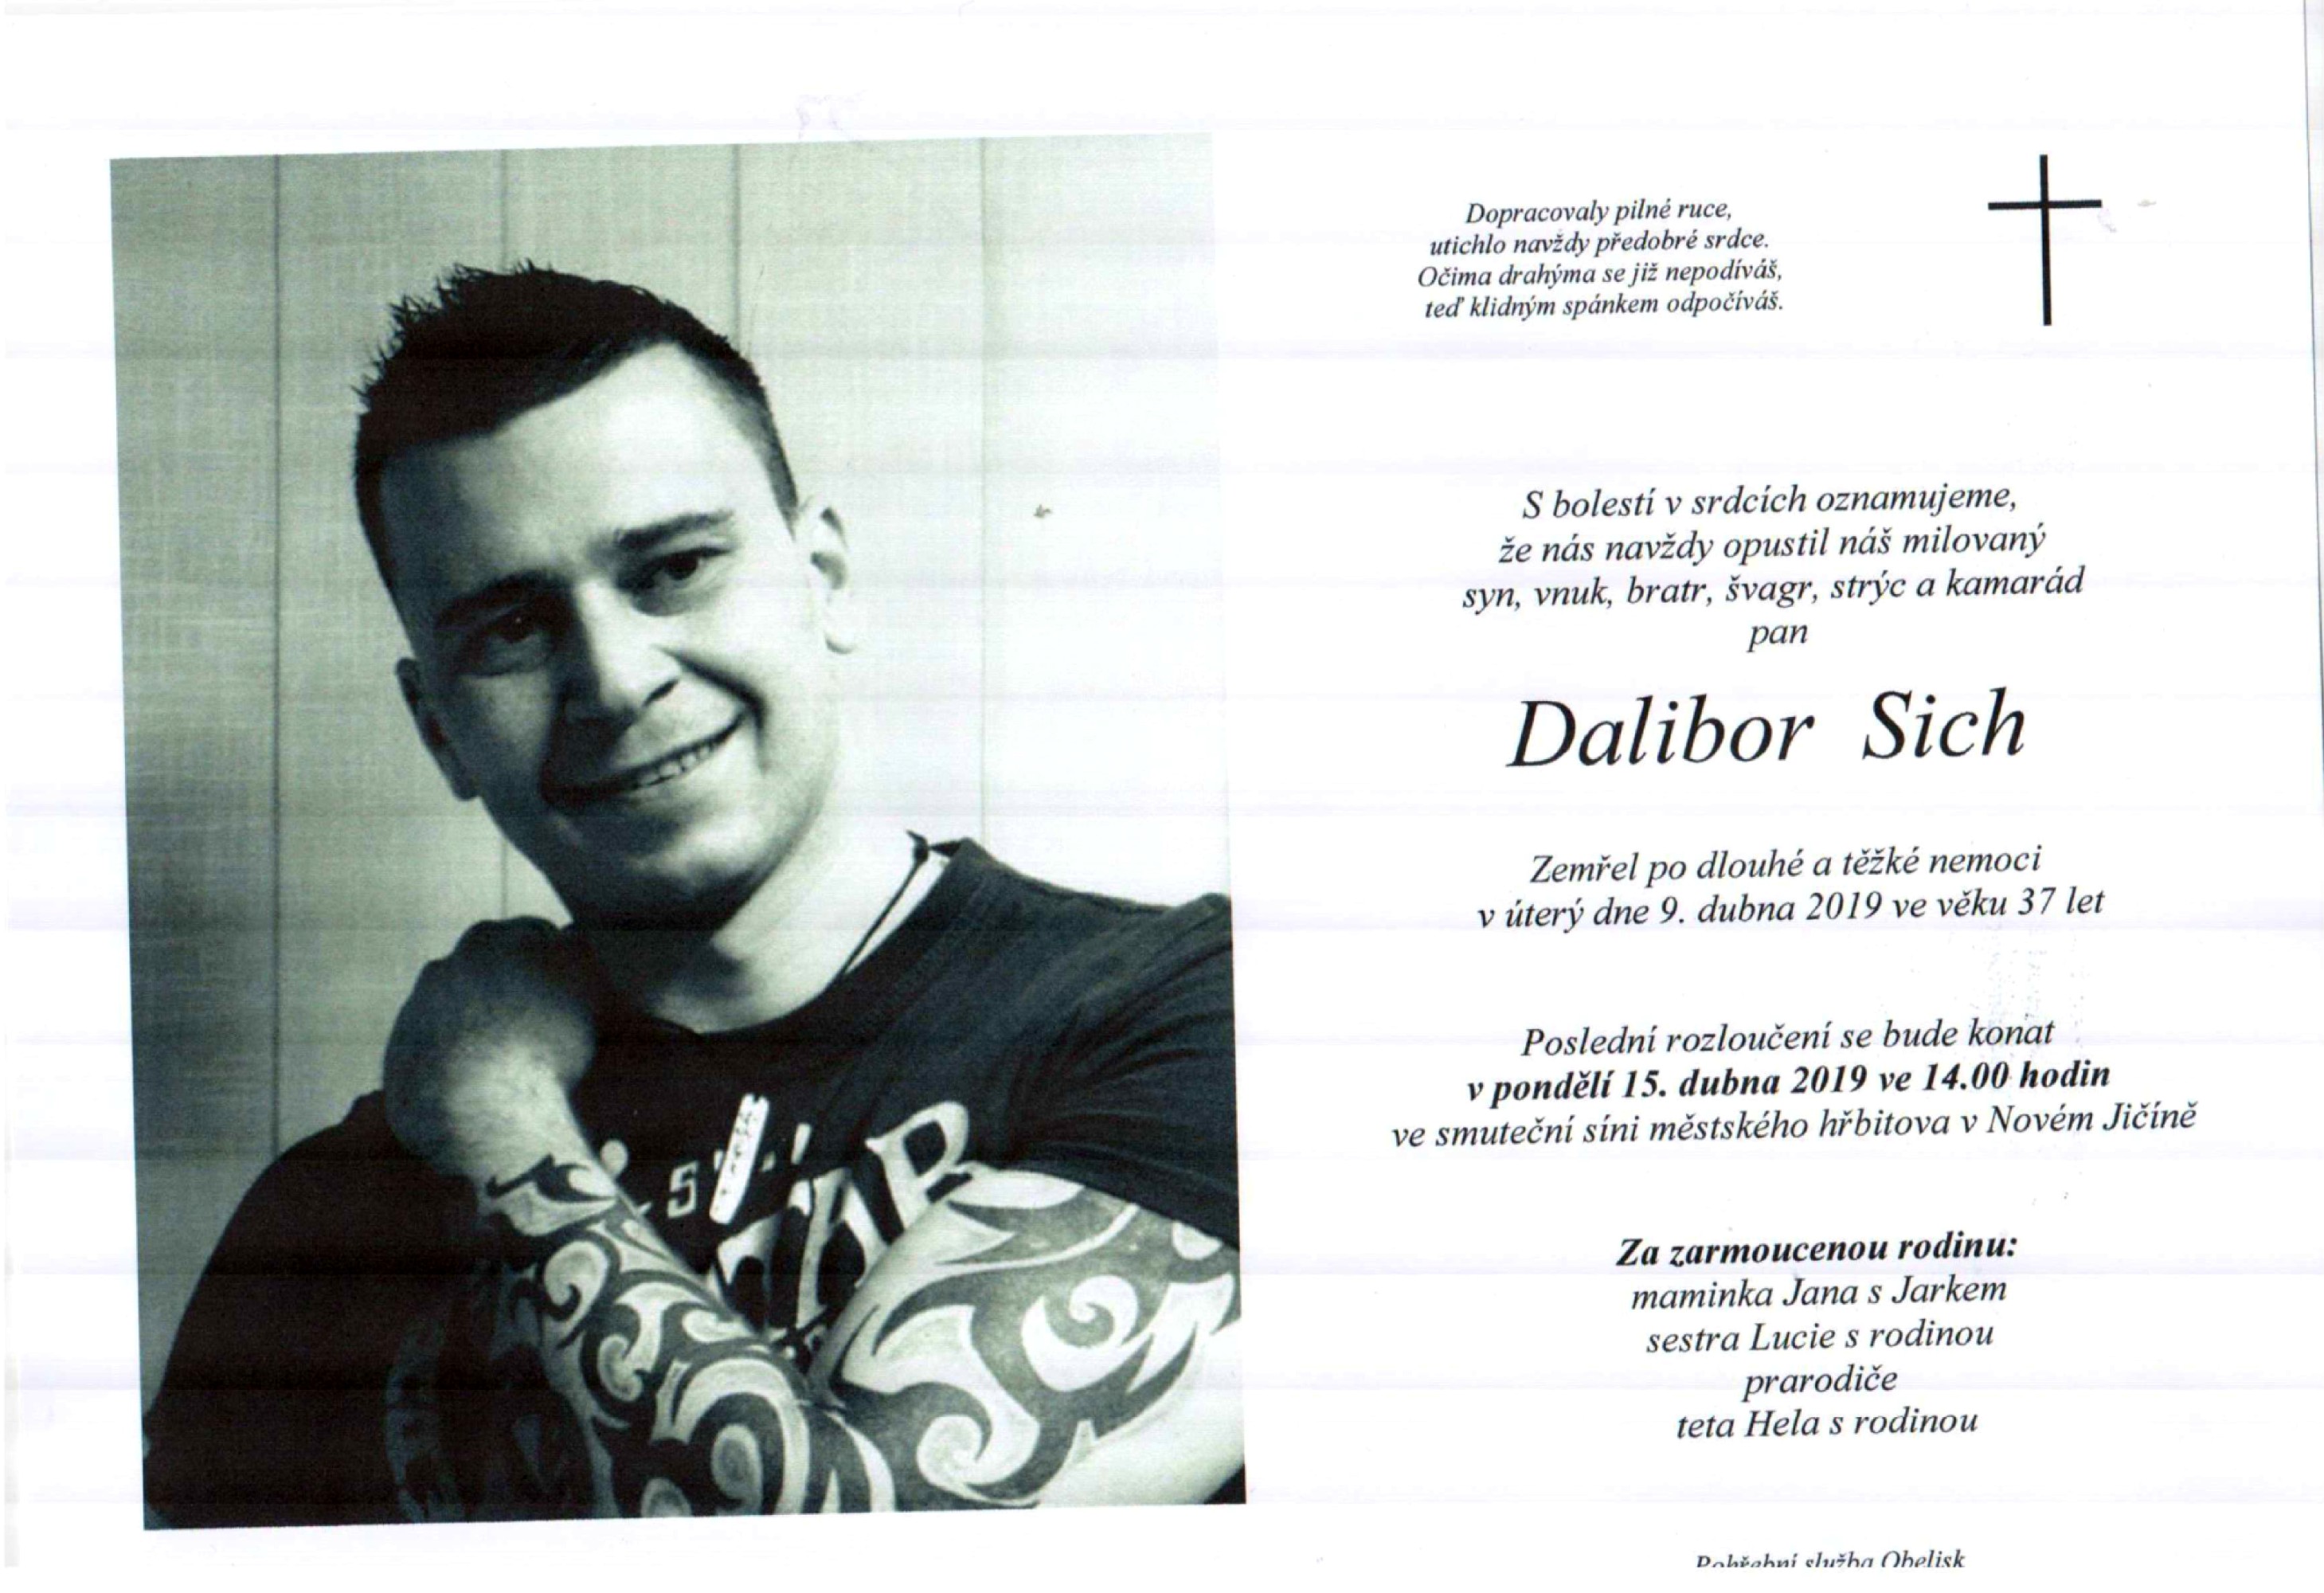 Dalibor Sich